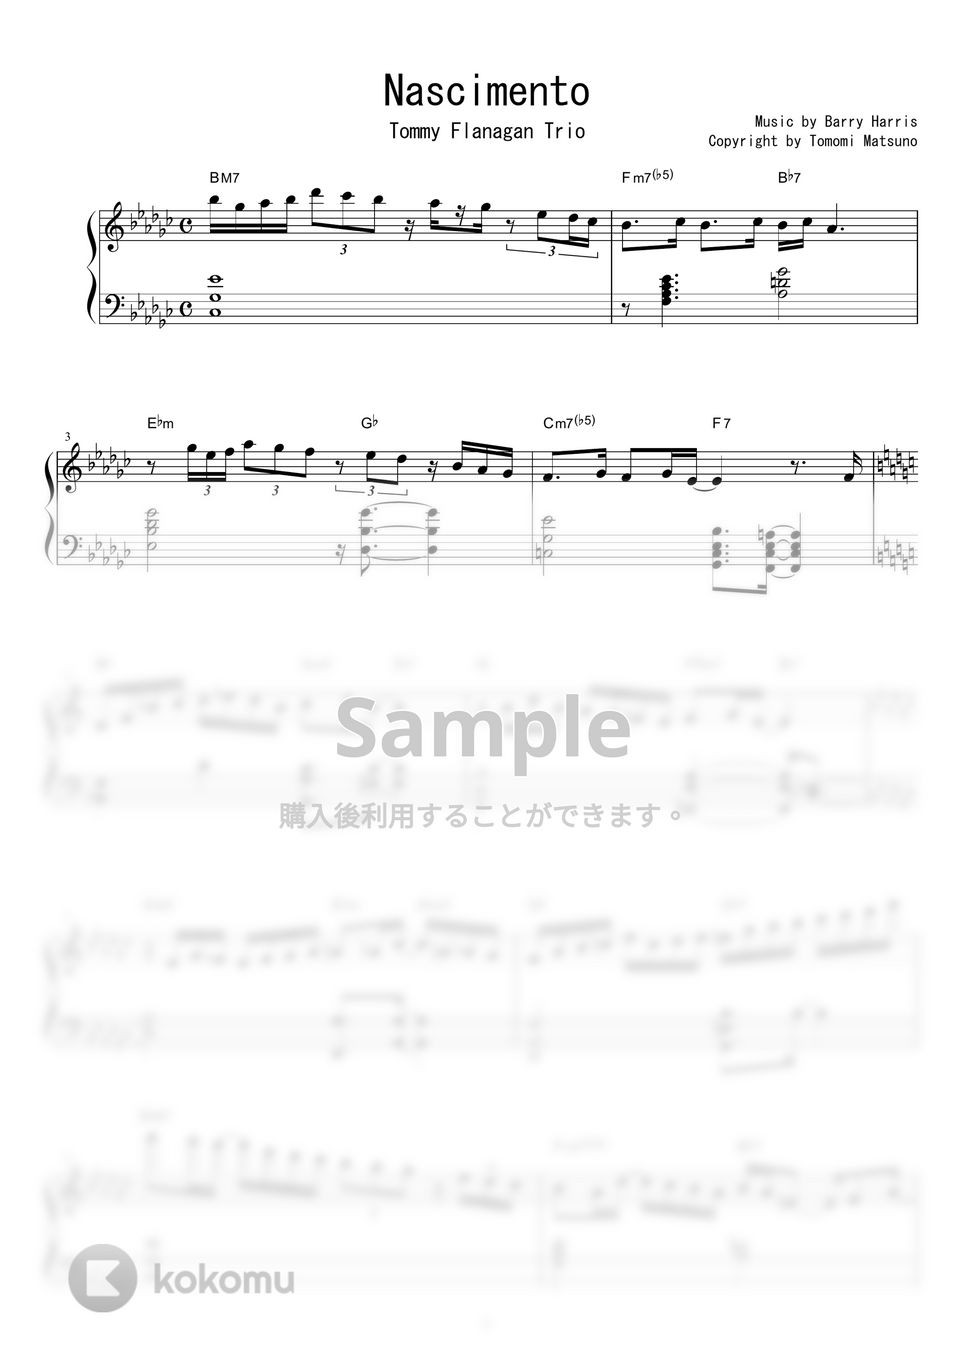 Tommy Flanagan - Nascimento 楽譜 by piano*score